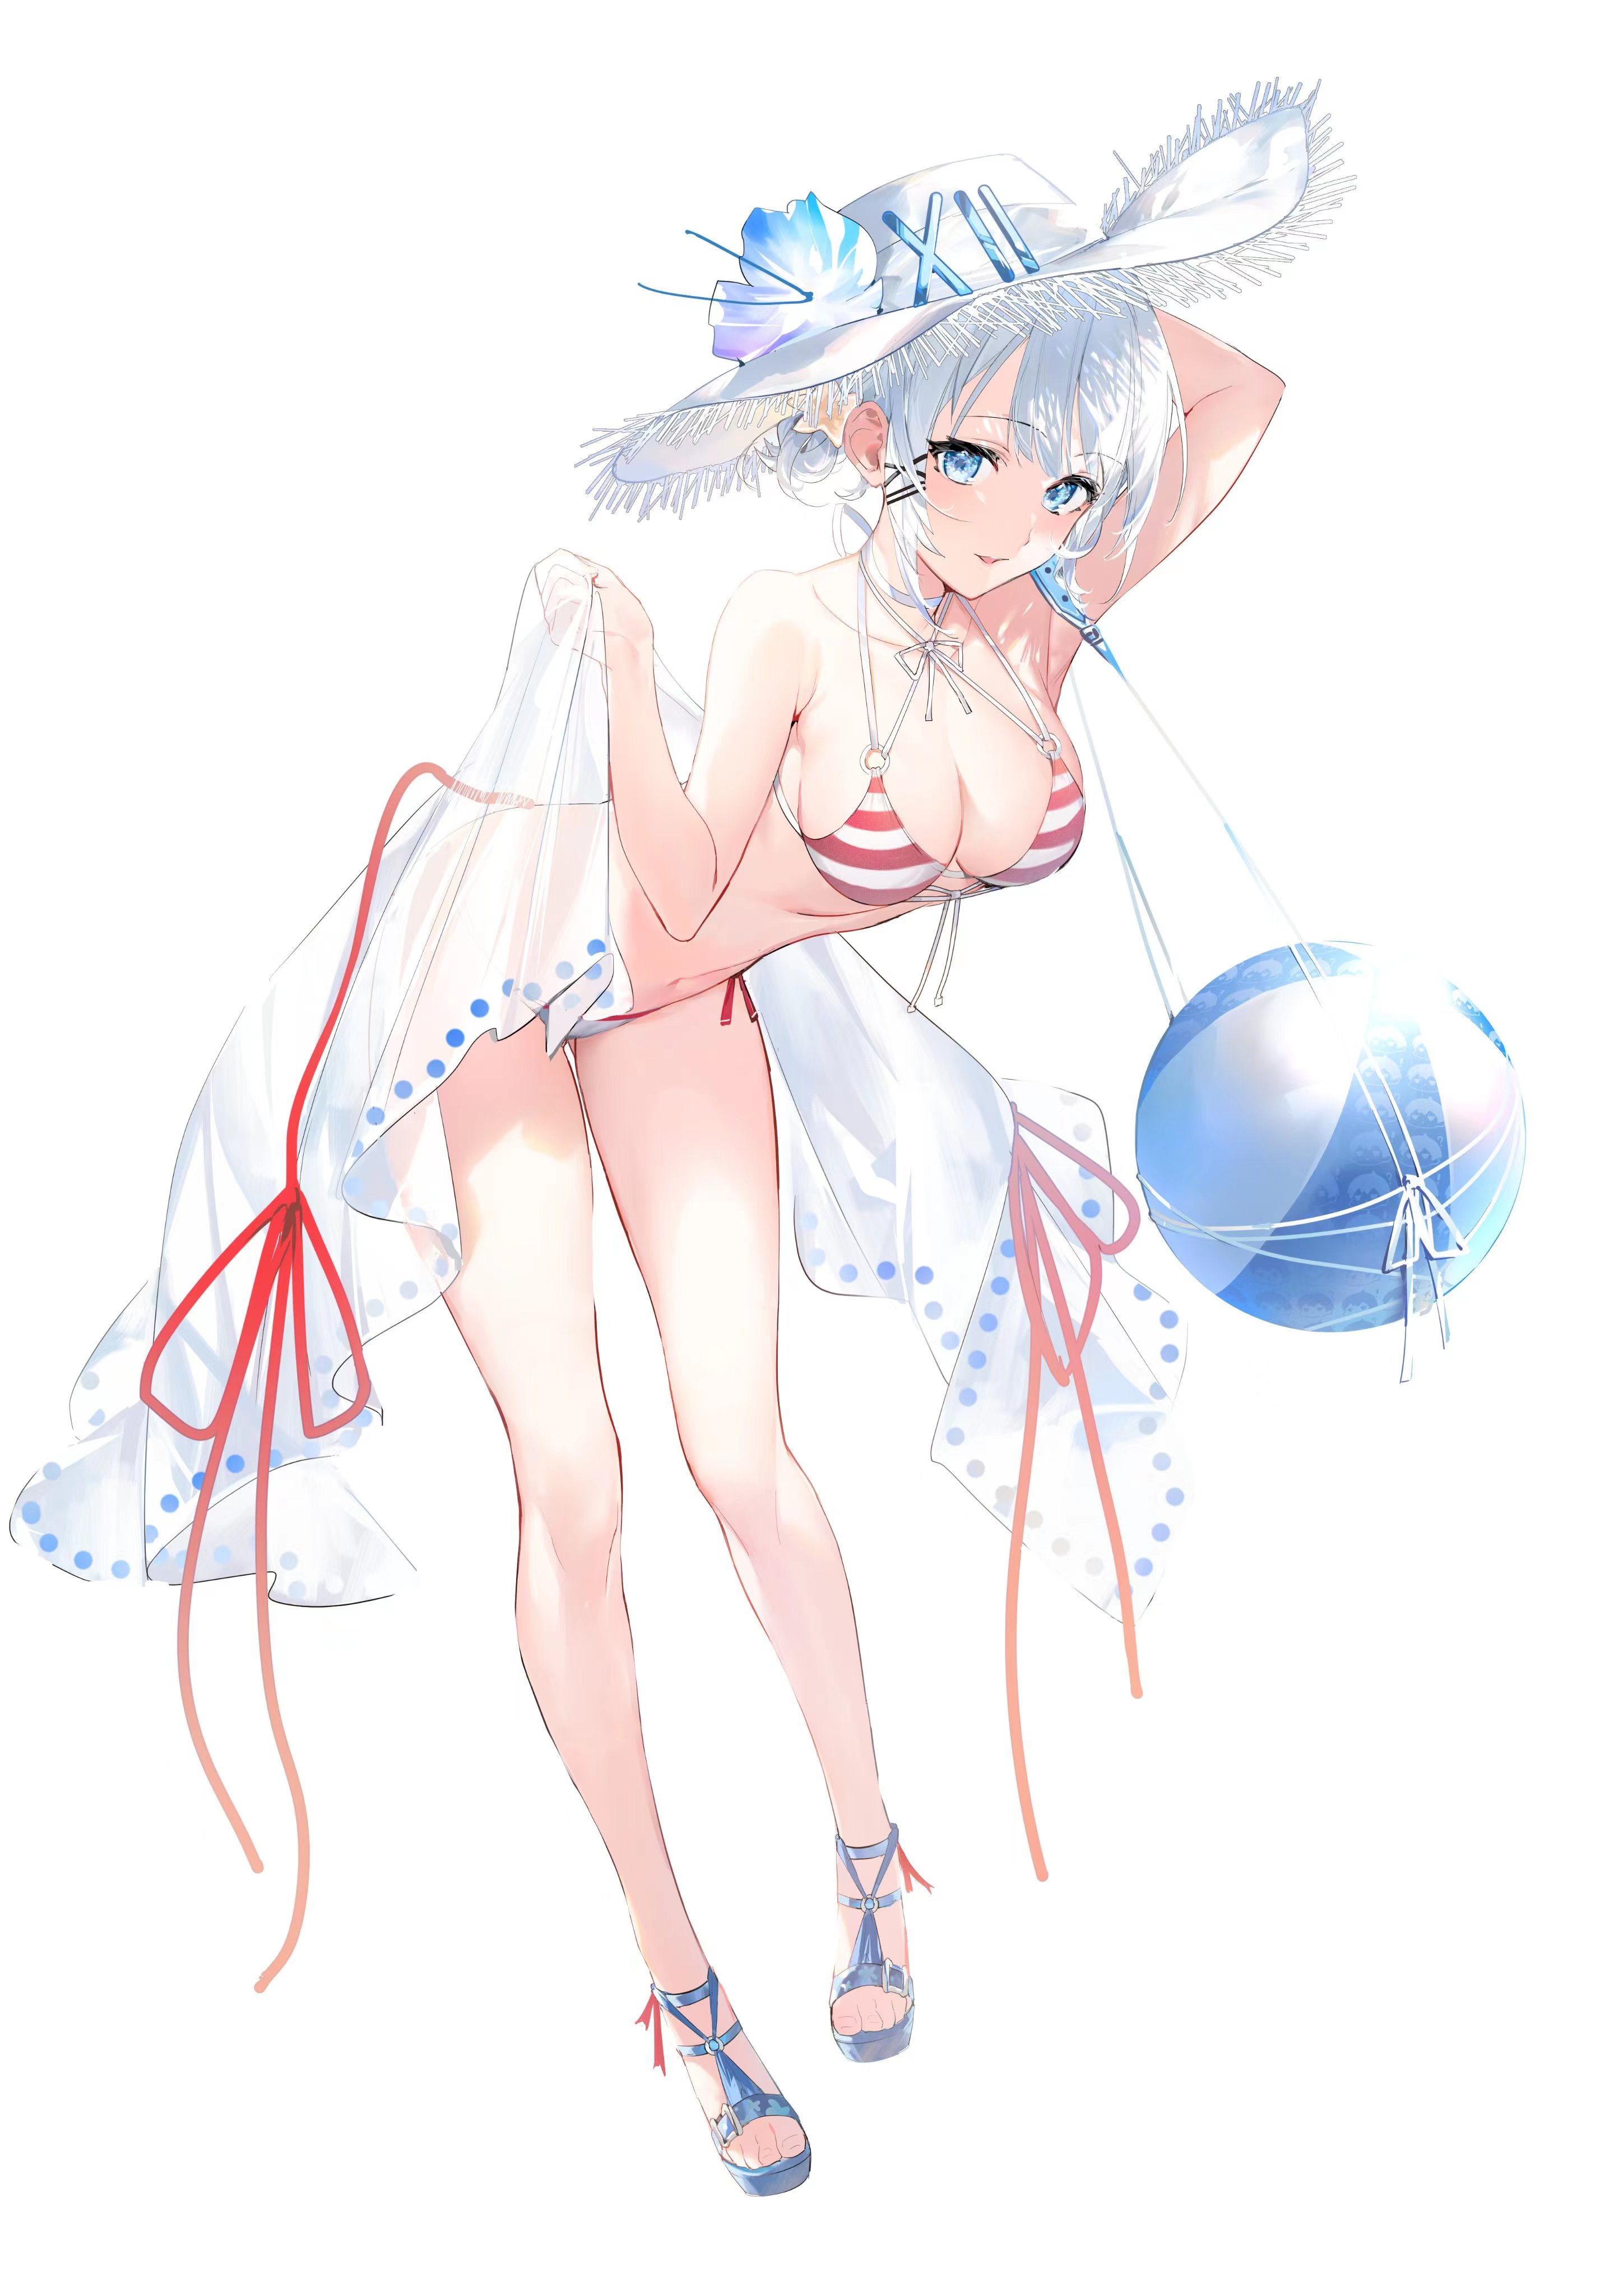 Anime 2896x4096 anime anime girls Tantei Wa Mou Shindeiru bikini beach ball cleavage